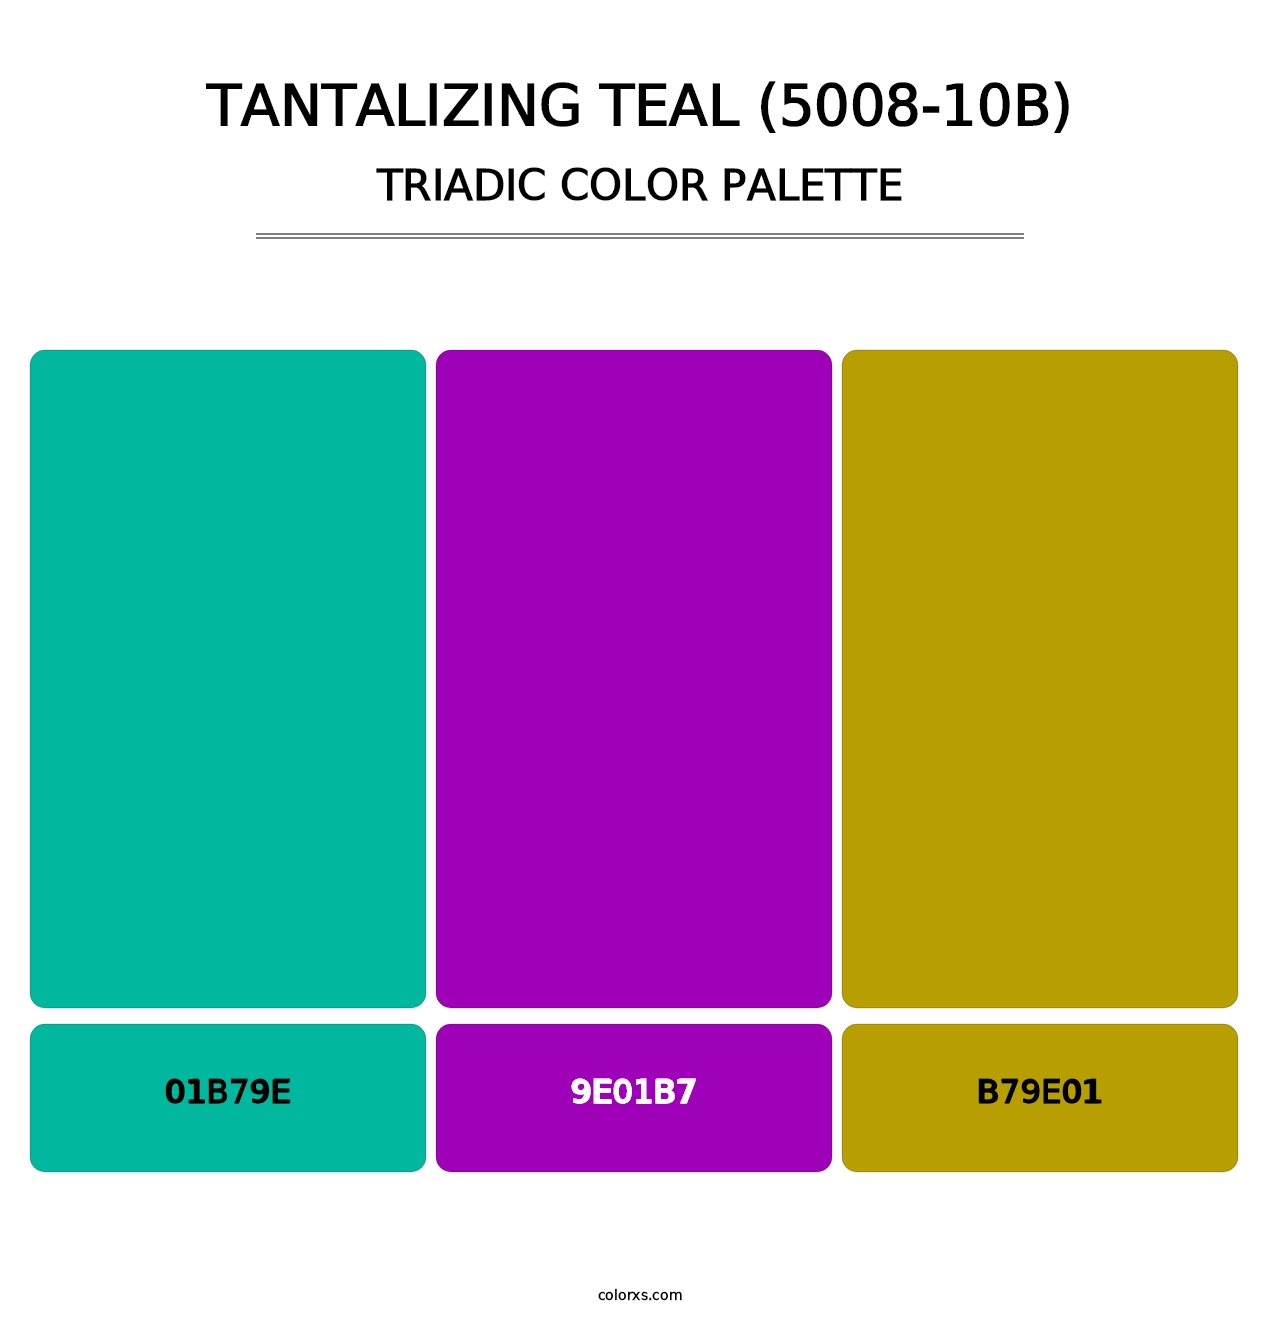 Tantalizing Teal (5008-10B) - Triadic Color Palette